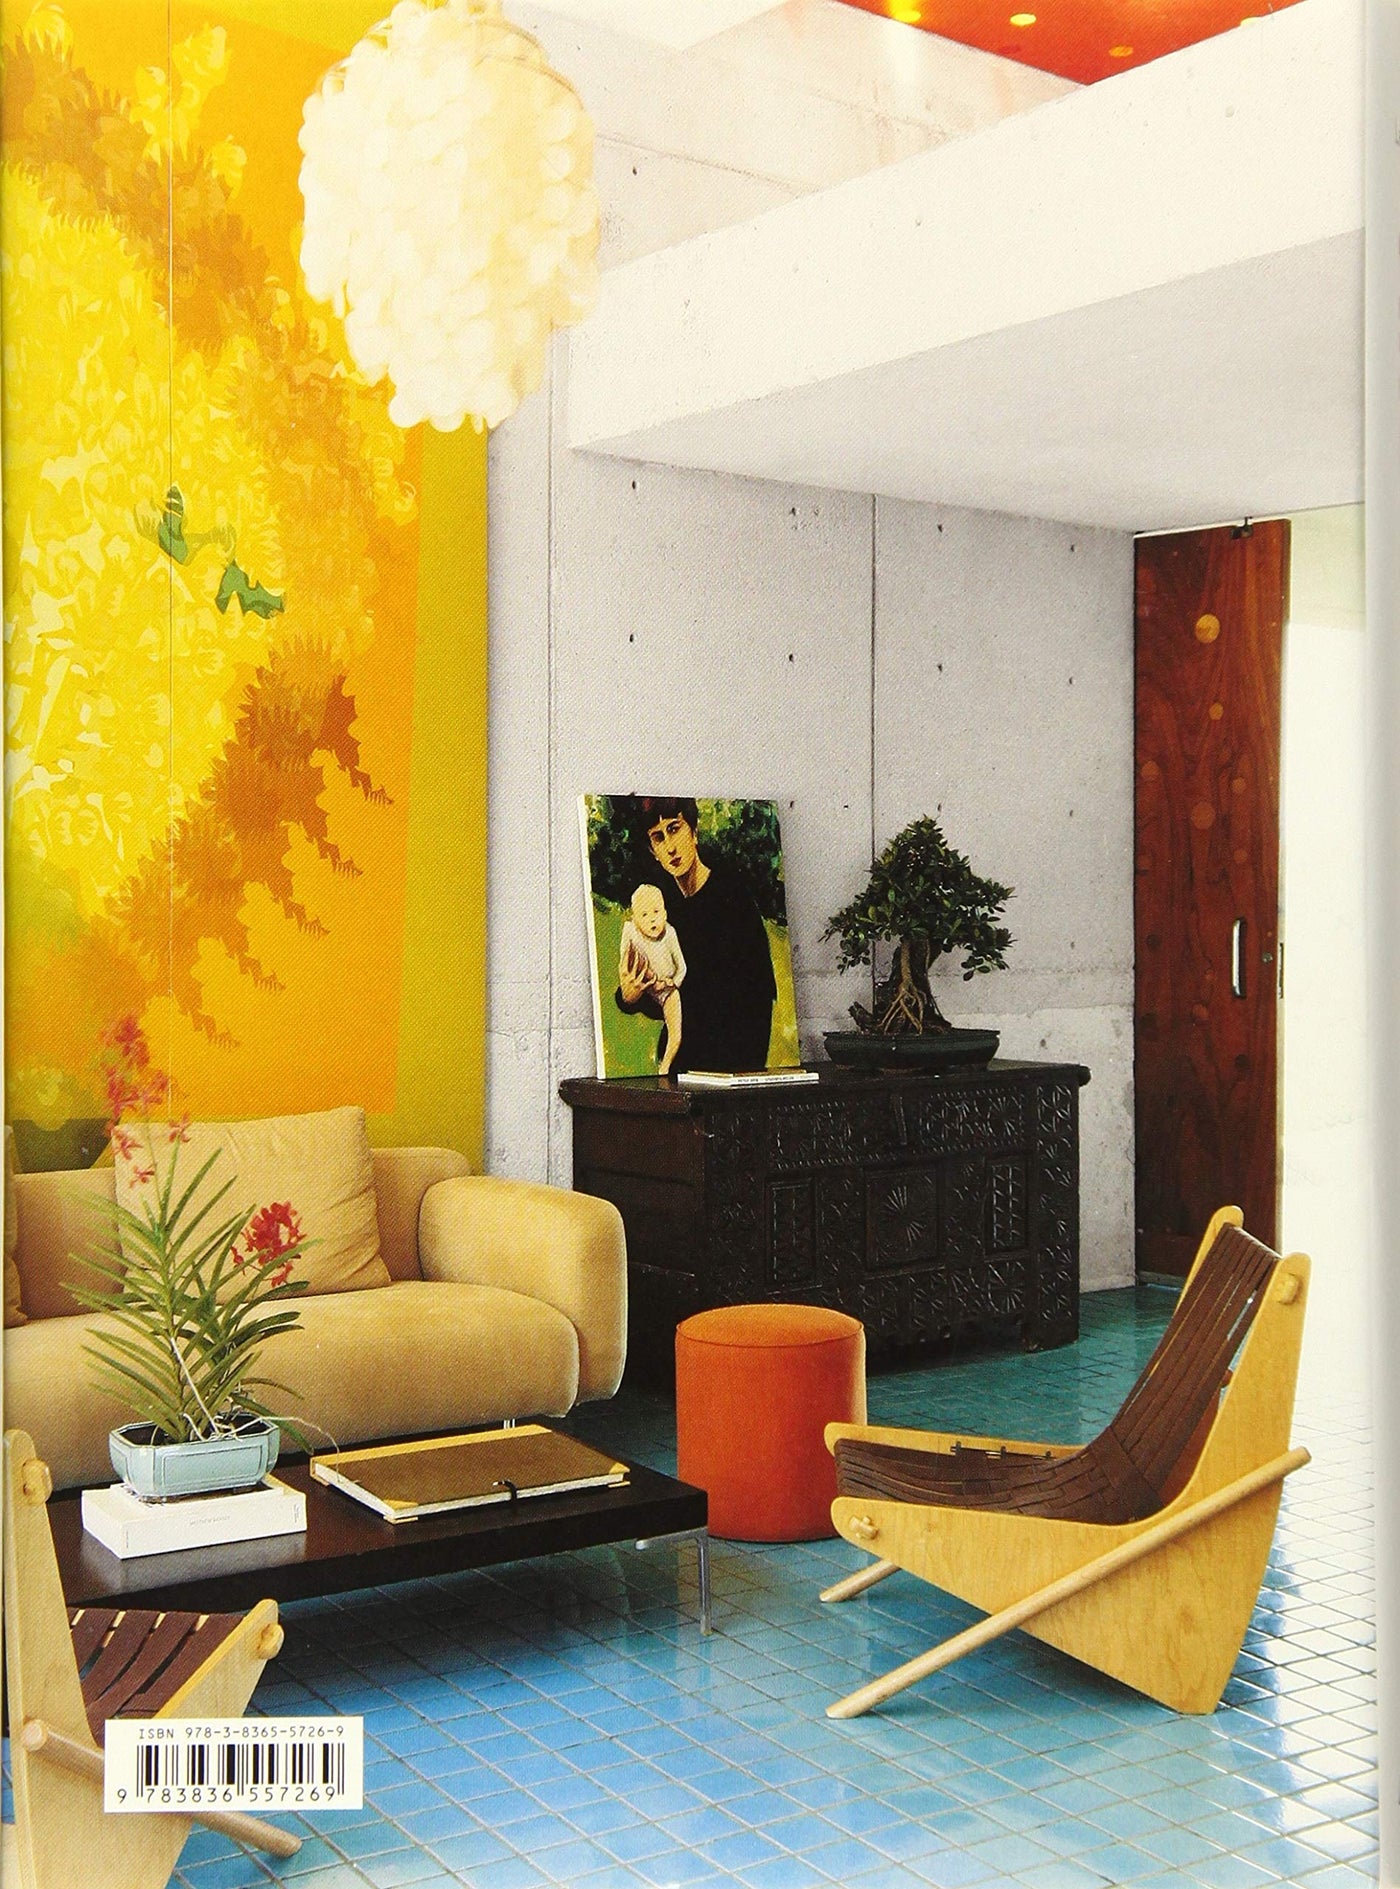 BU Hardcover: 100 Interiors Around the World - Just Fabulous Palm Springs